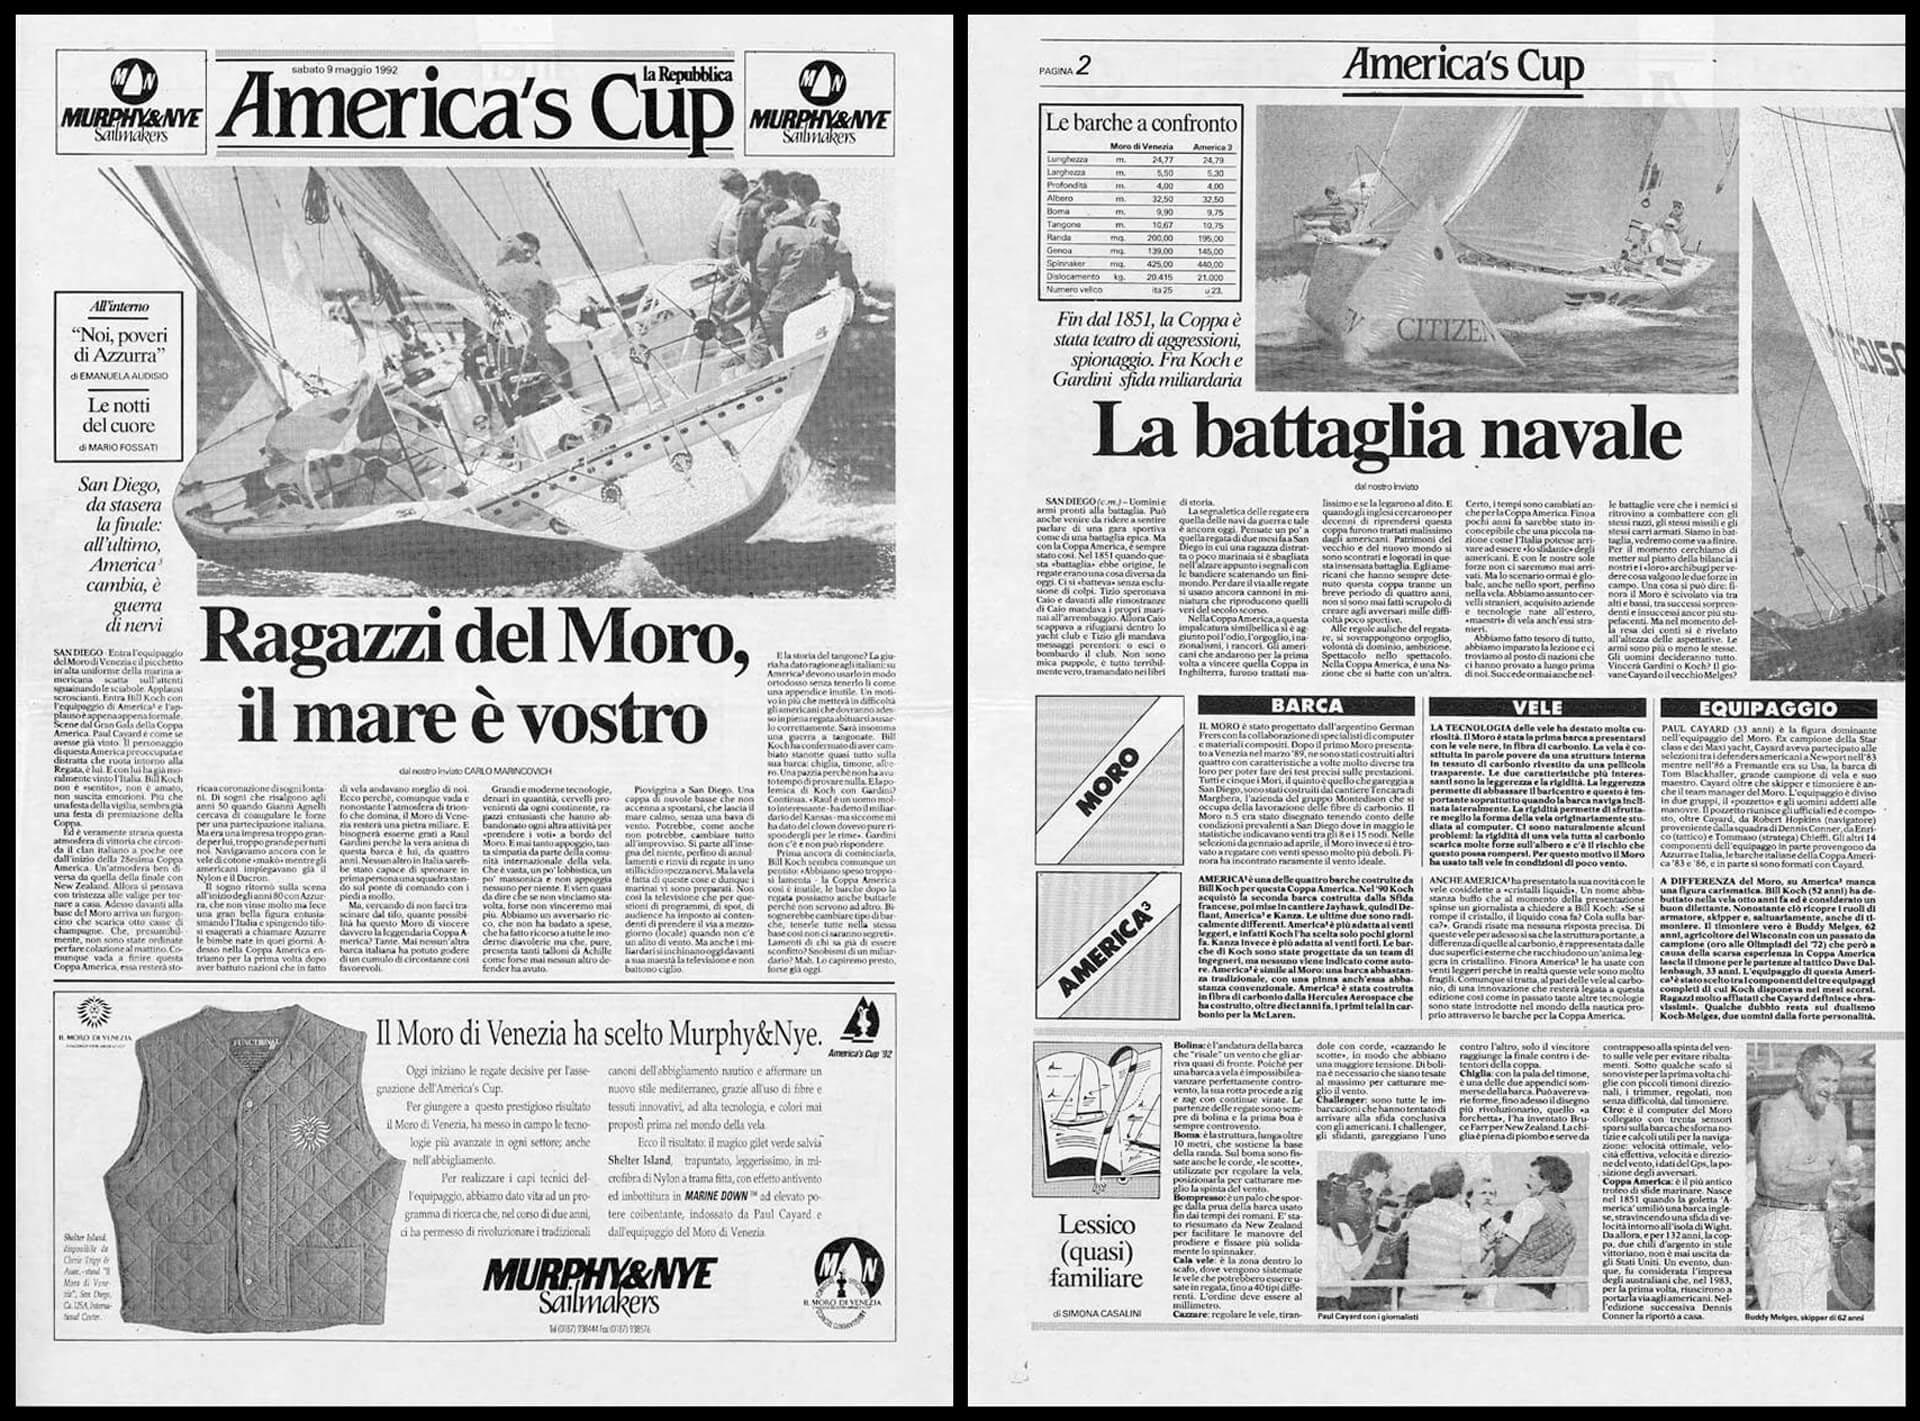 Heritage America’s Cup Leaflet (1992)